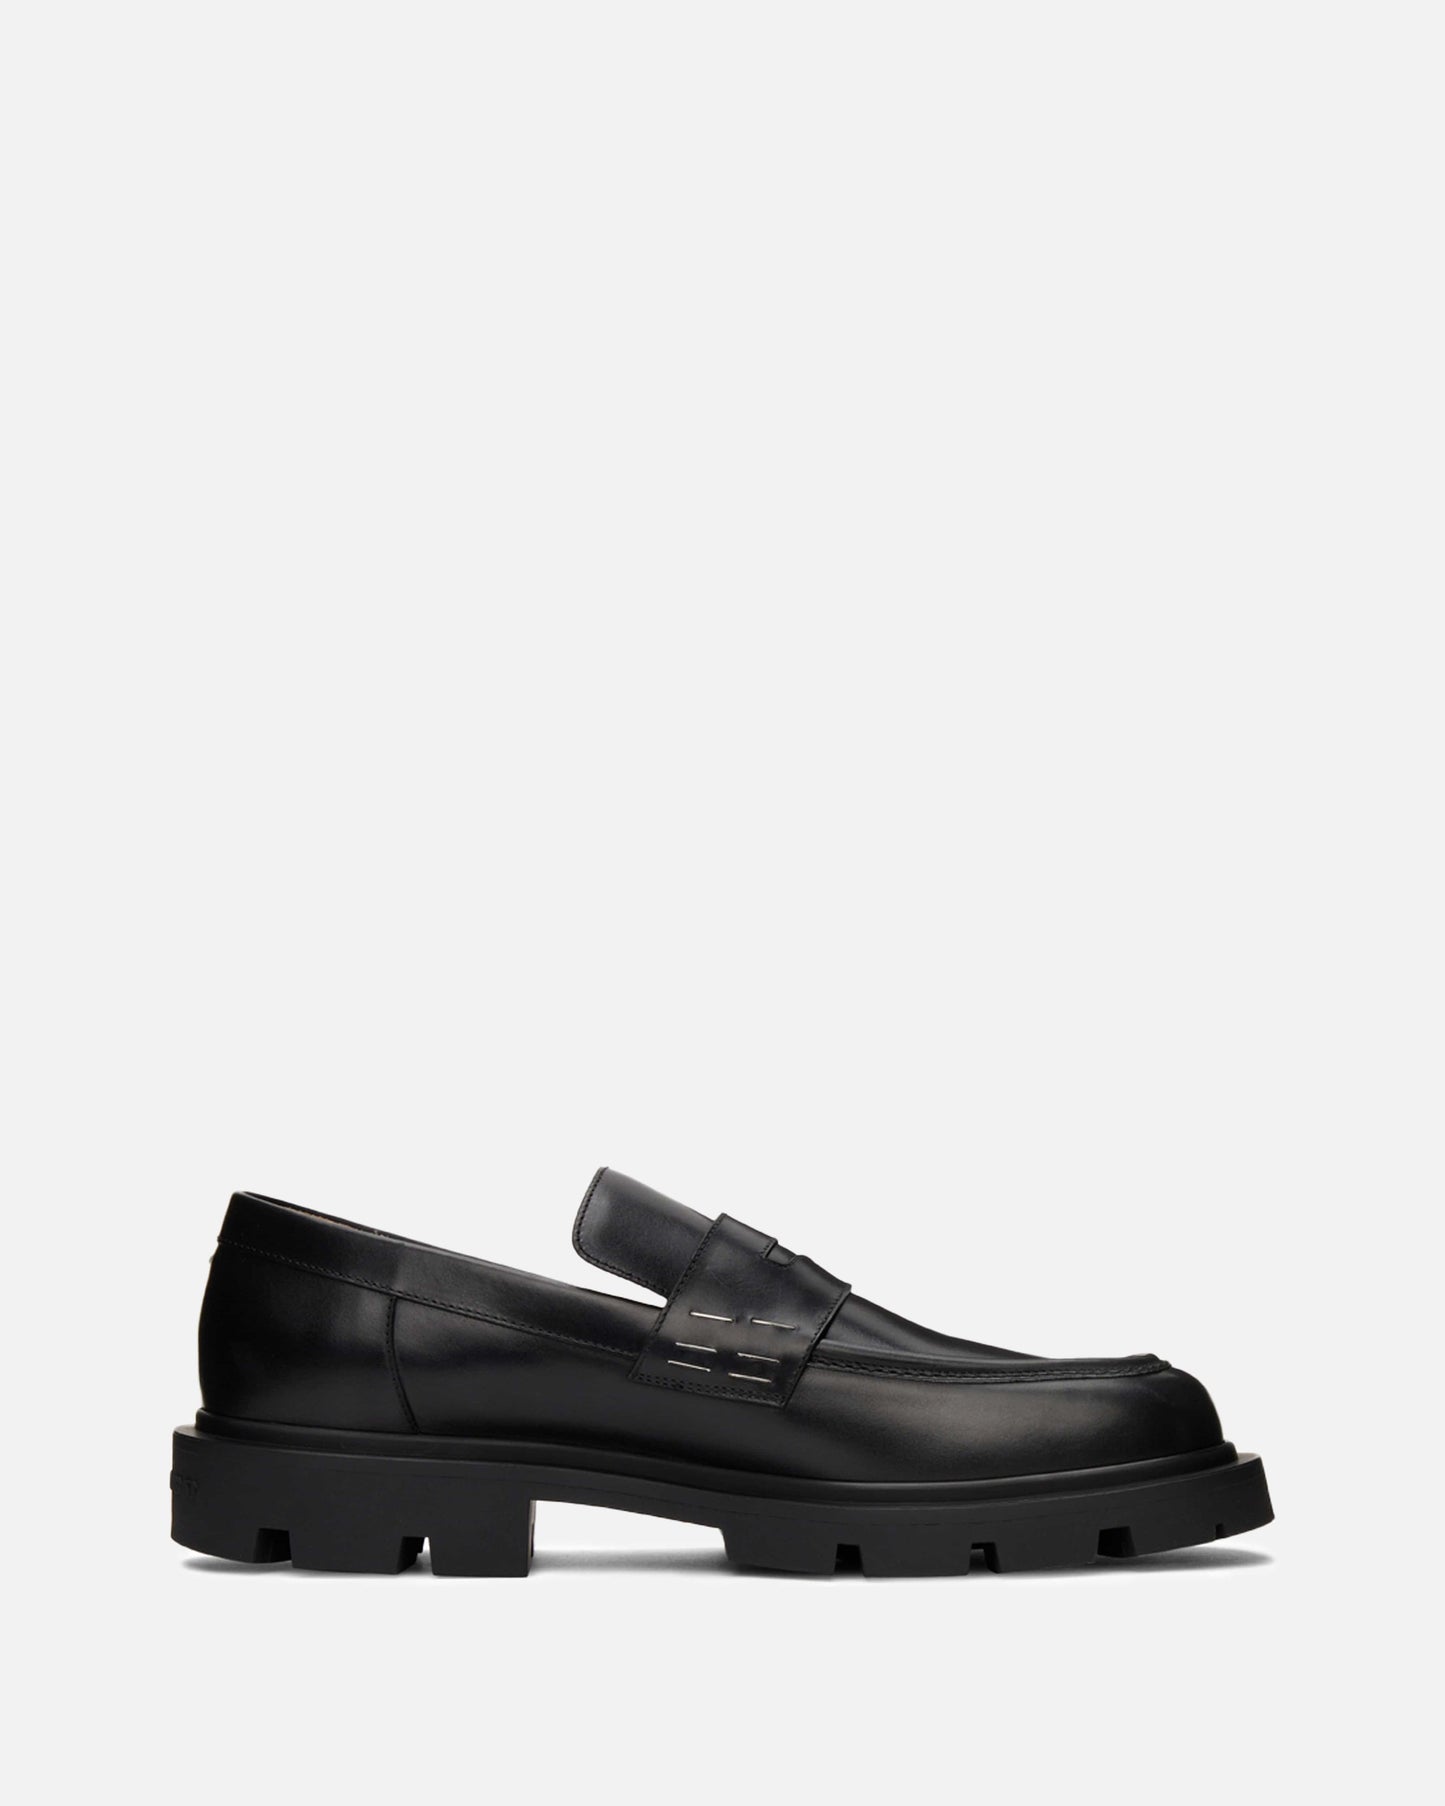 Maison Margiela Men's Shoes Staple Loafers in Black